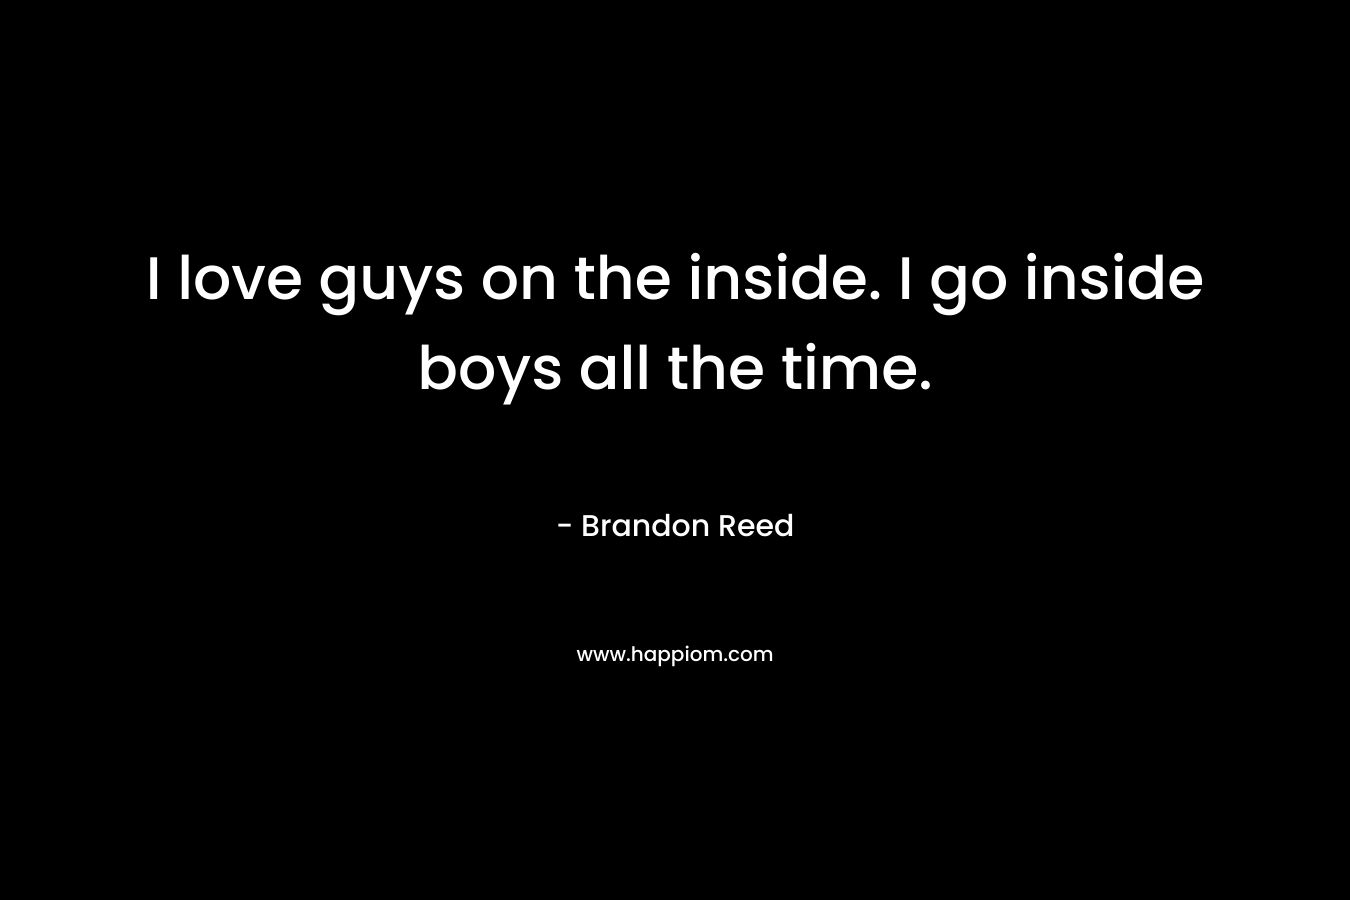 I love guys on the inside. I go inside boys all the time.